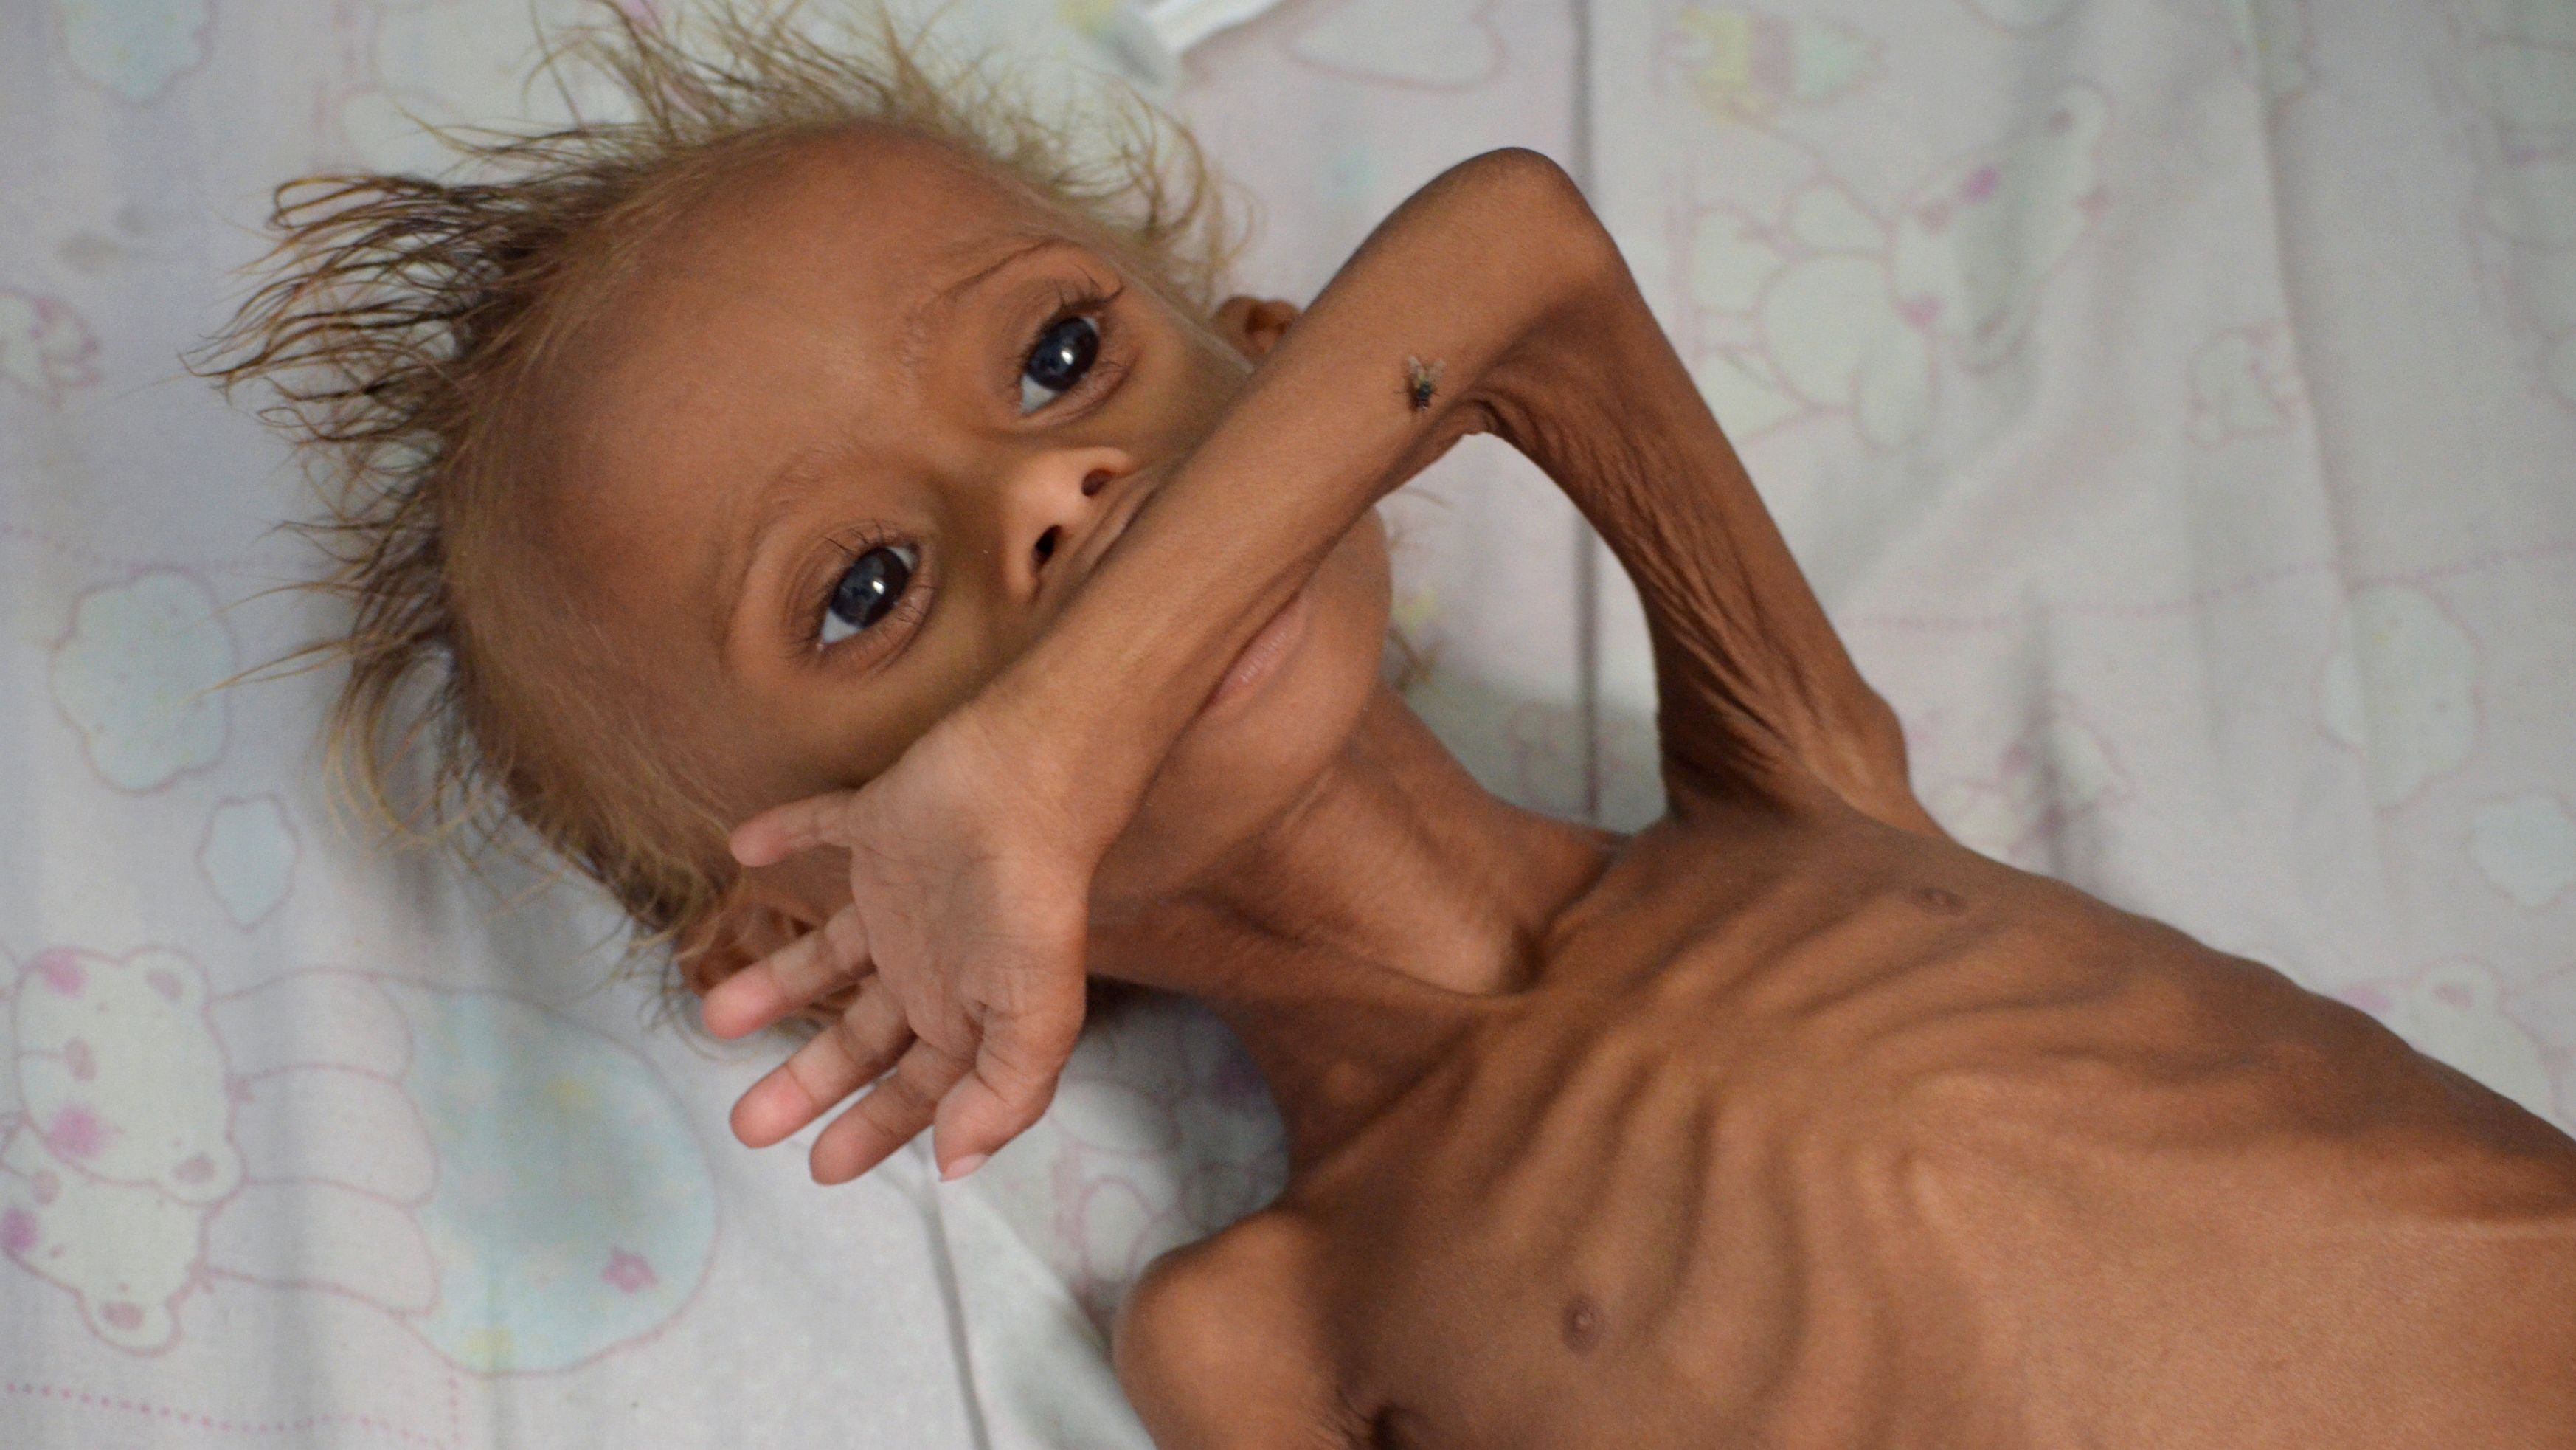 A malnourished boy lies in hospital in Houdieda, Yemen on September 9, 2016